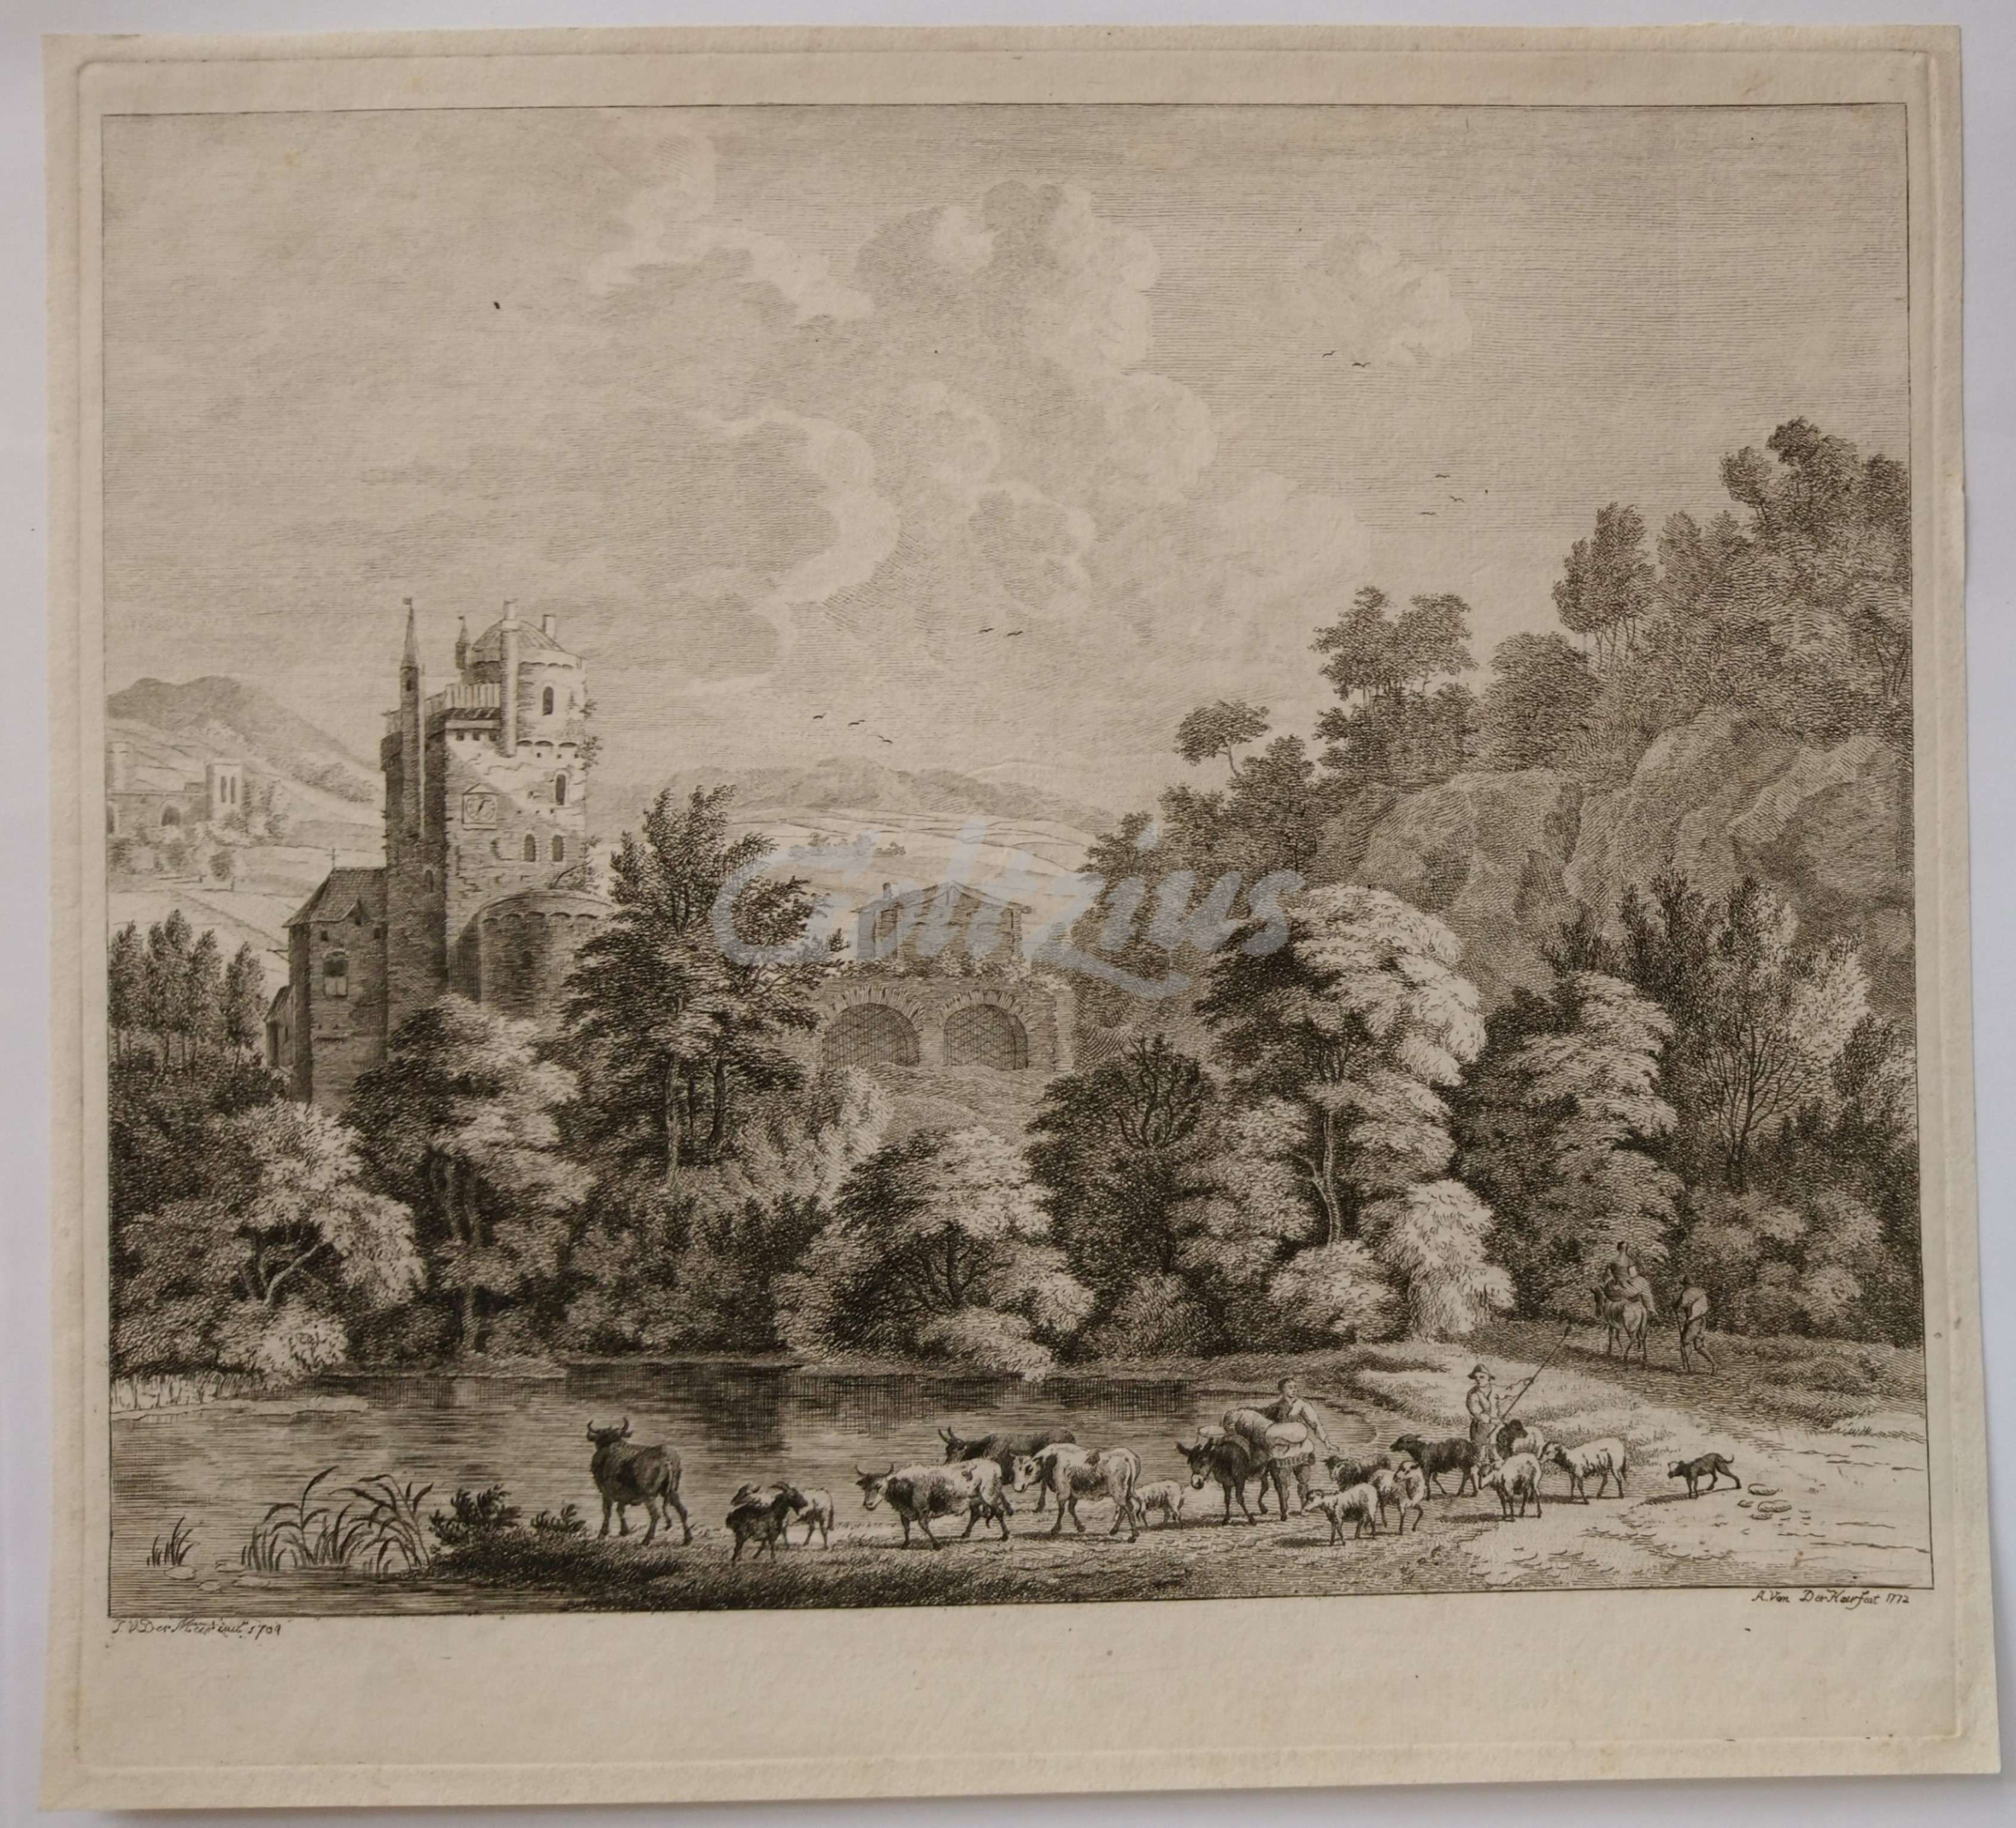 HAER, ANTHONY VAN DER, Hilly landscape with castle and shepherds